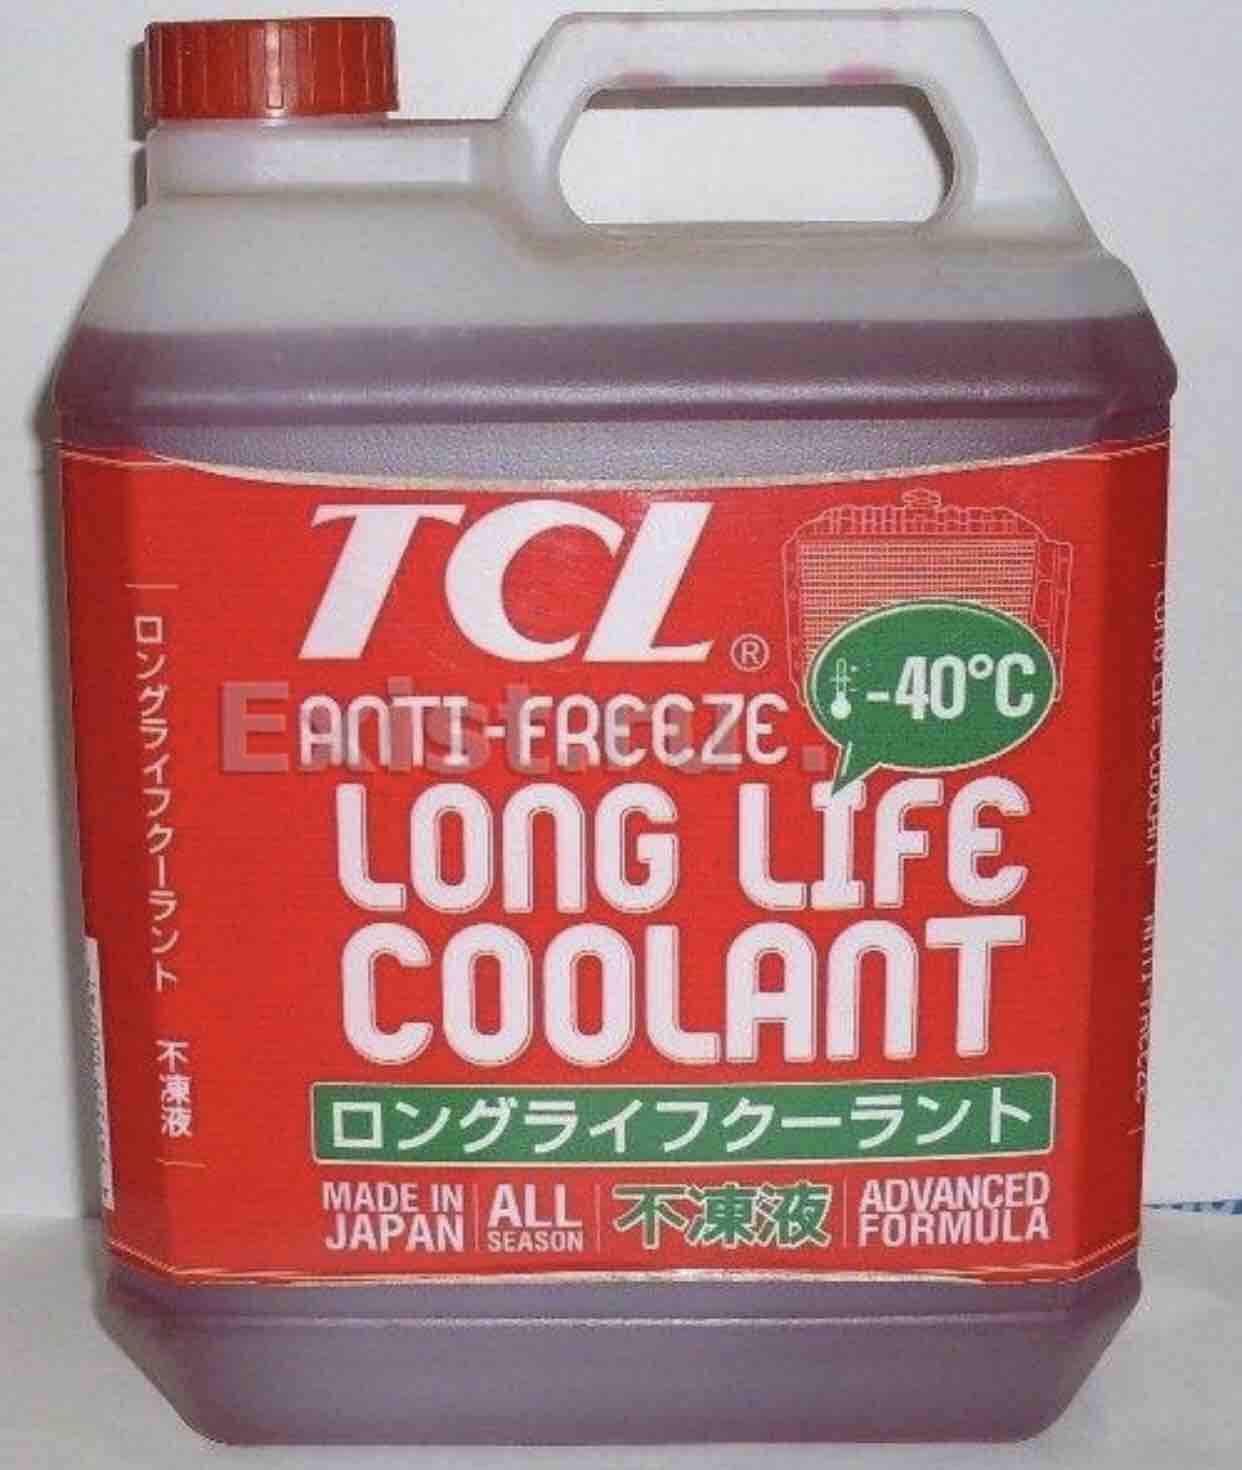 Tcl long life coolant. Антифриз TCL long Life Coolant -40 c. Антифриз long Life Coolant красный. Антифриз TCL long Life Coolant LLC, зеленый. TCL llc01236.